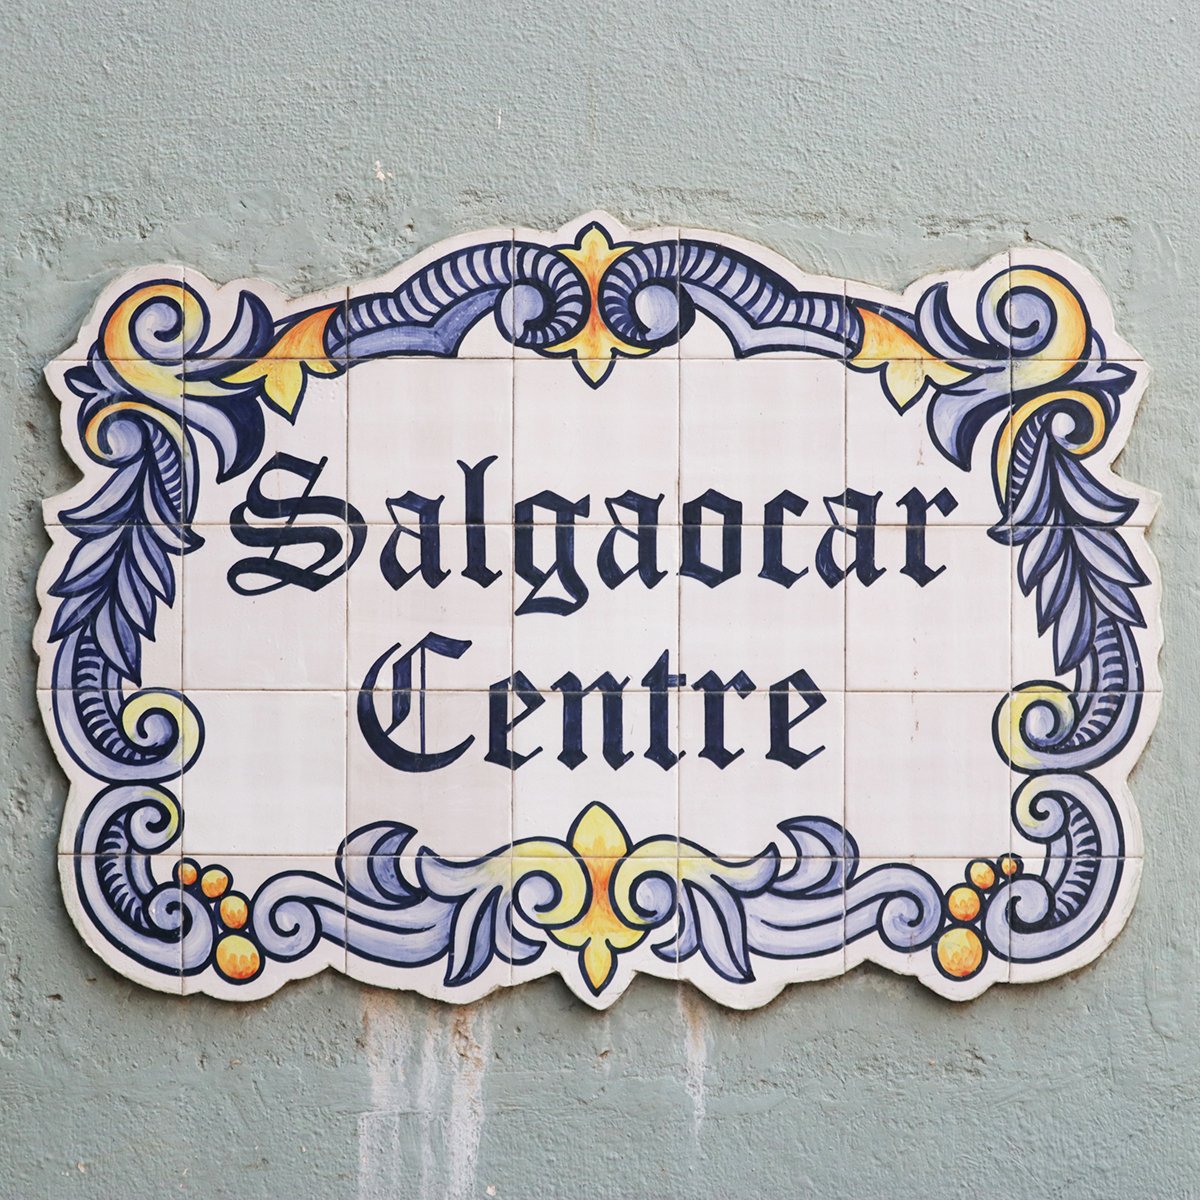 SalgaocarCentre_small.jpg